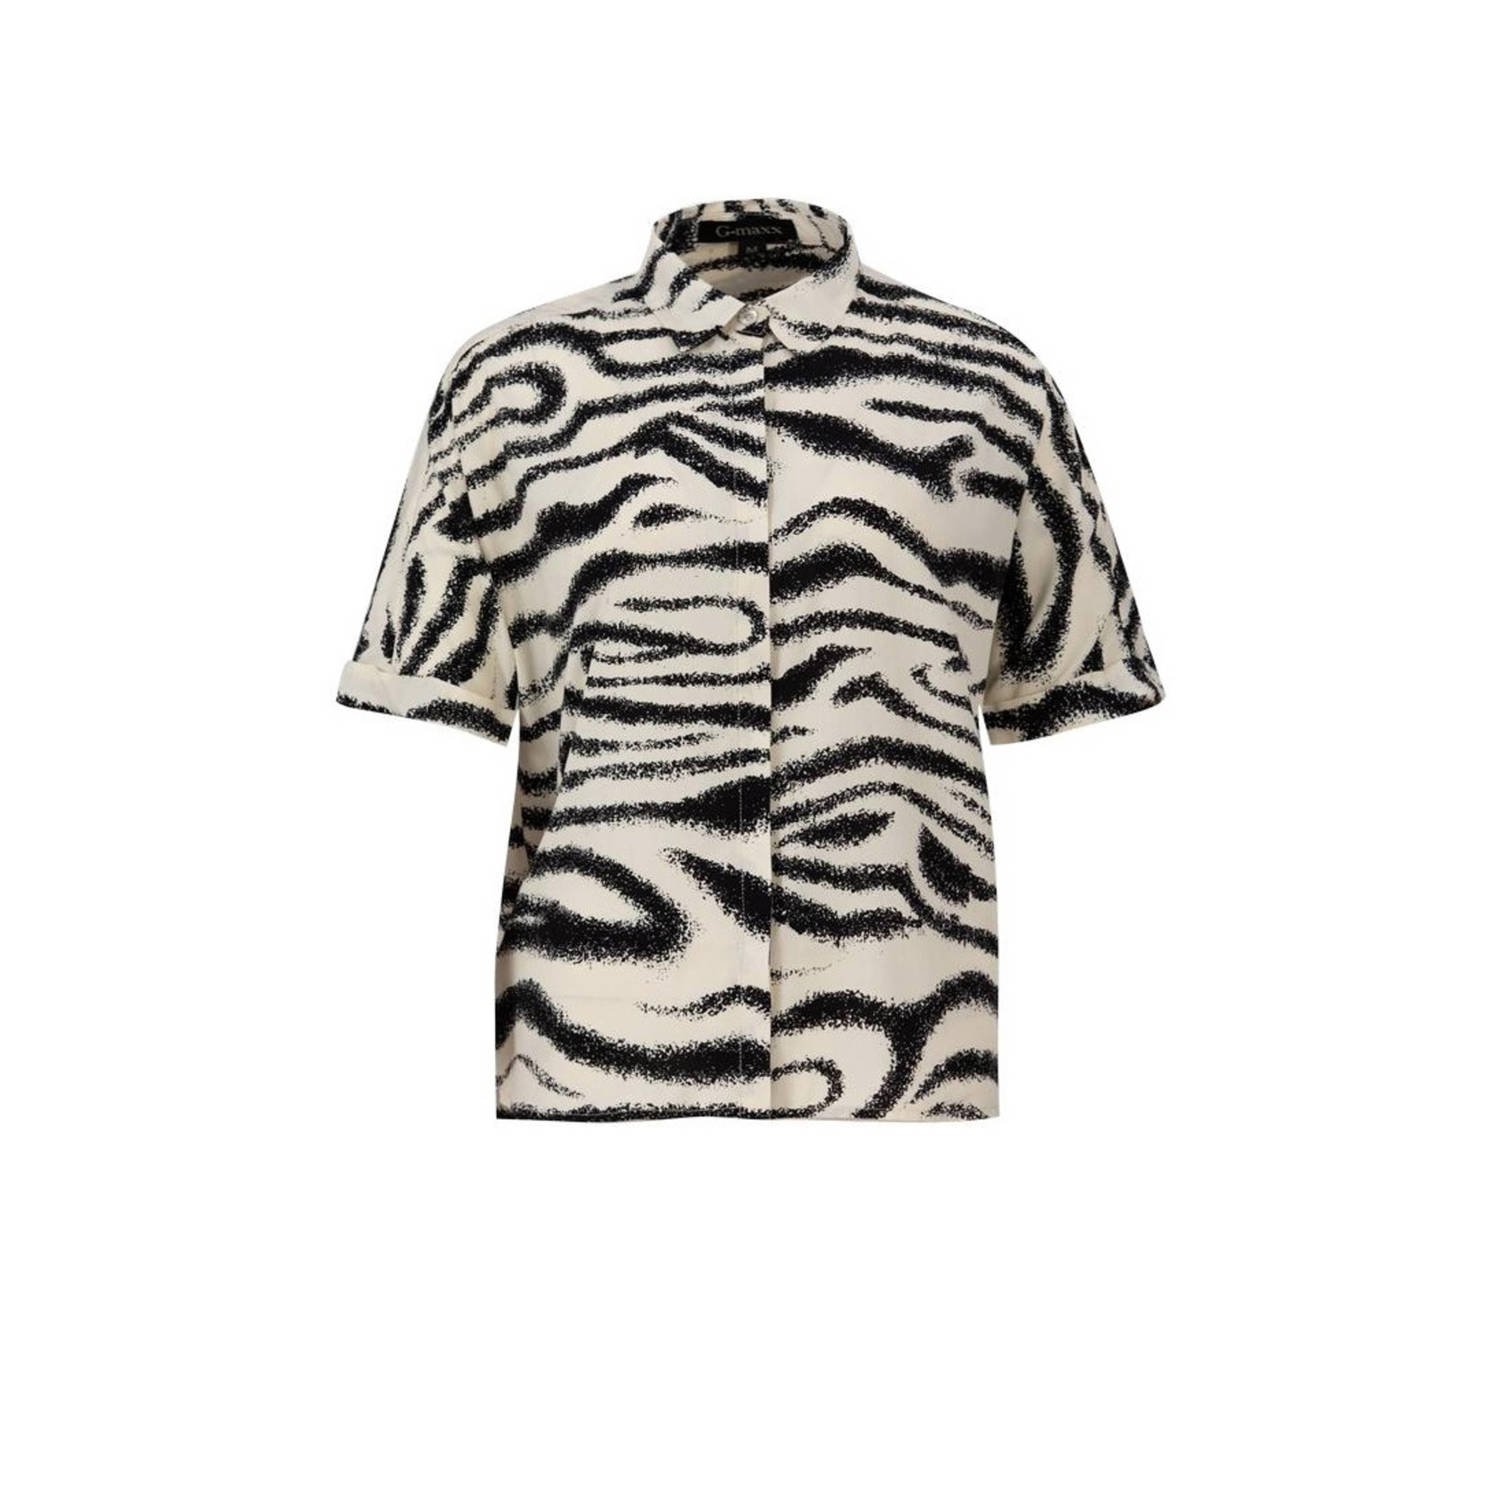 G-maxx blouse Naara met all over print zand zwart-014001